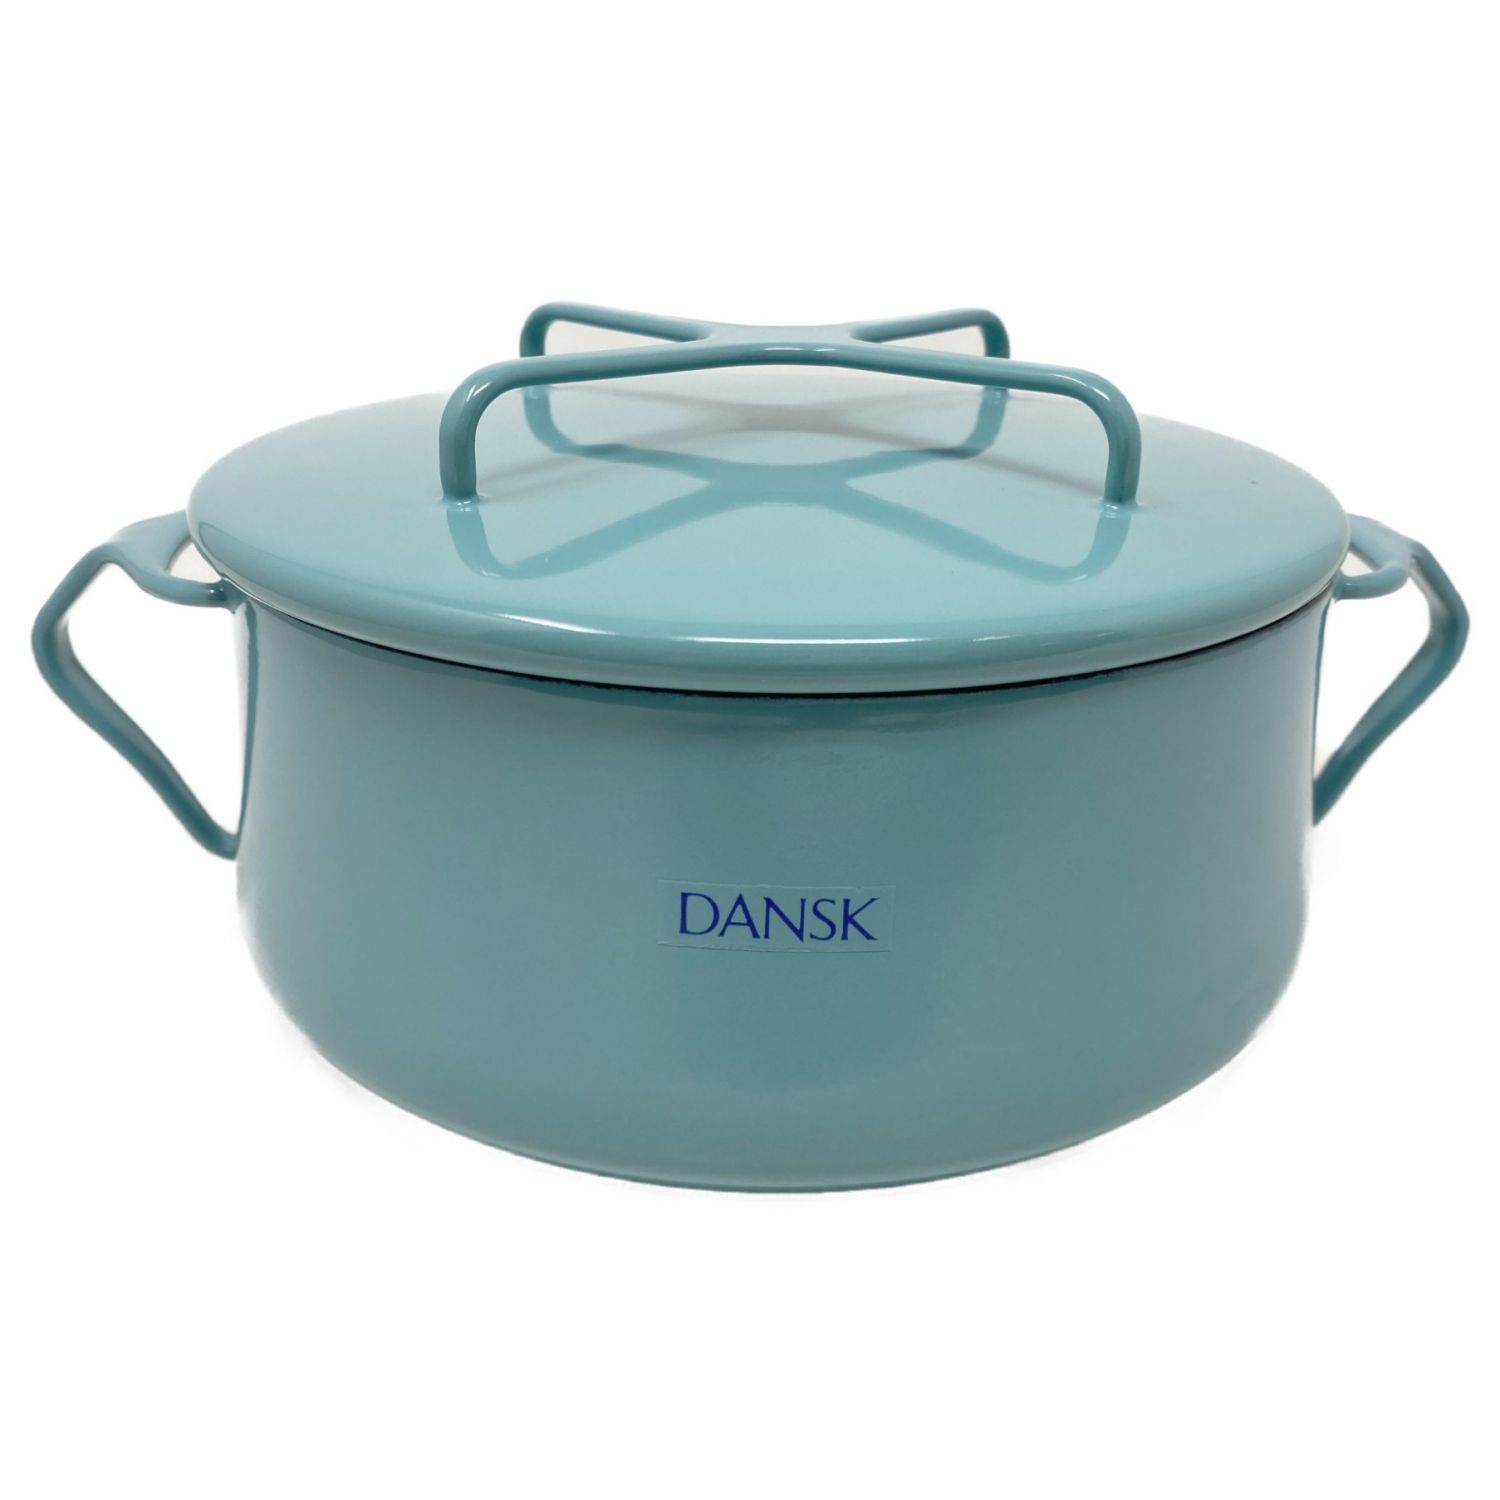 DANSK (ダンスク) 両手鍋 ターコイズ 未使用品 コベンスタイル2 18cm